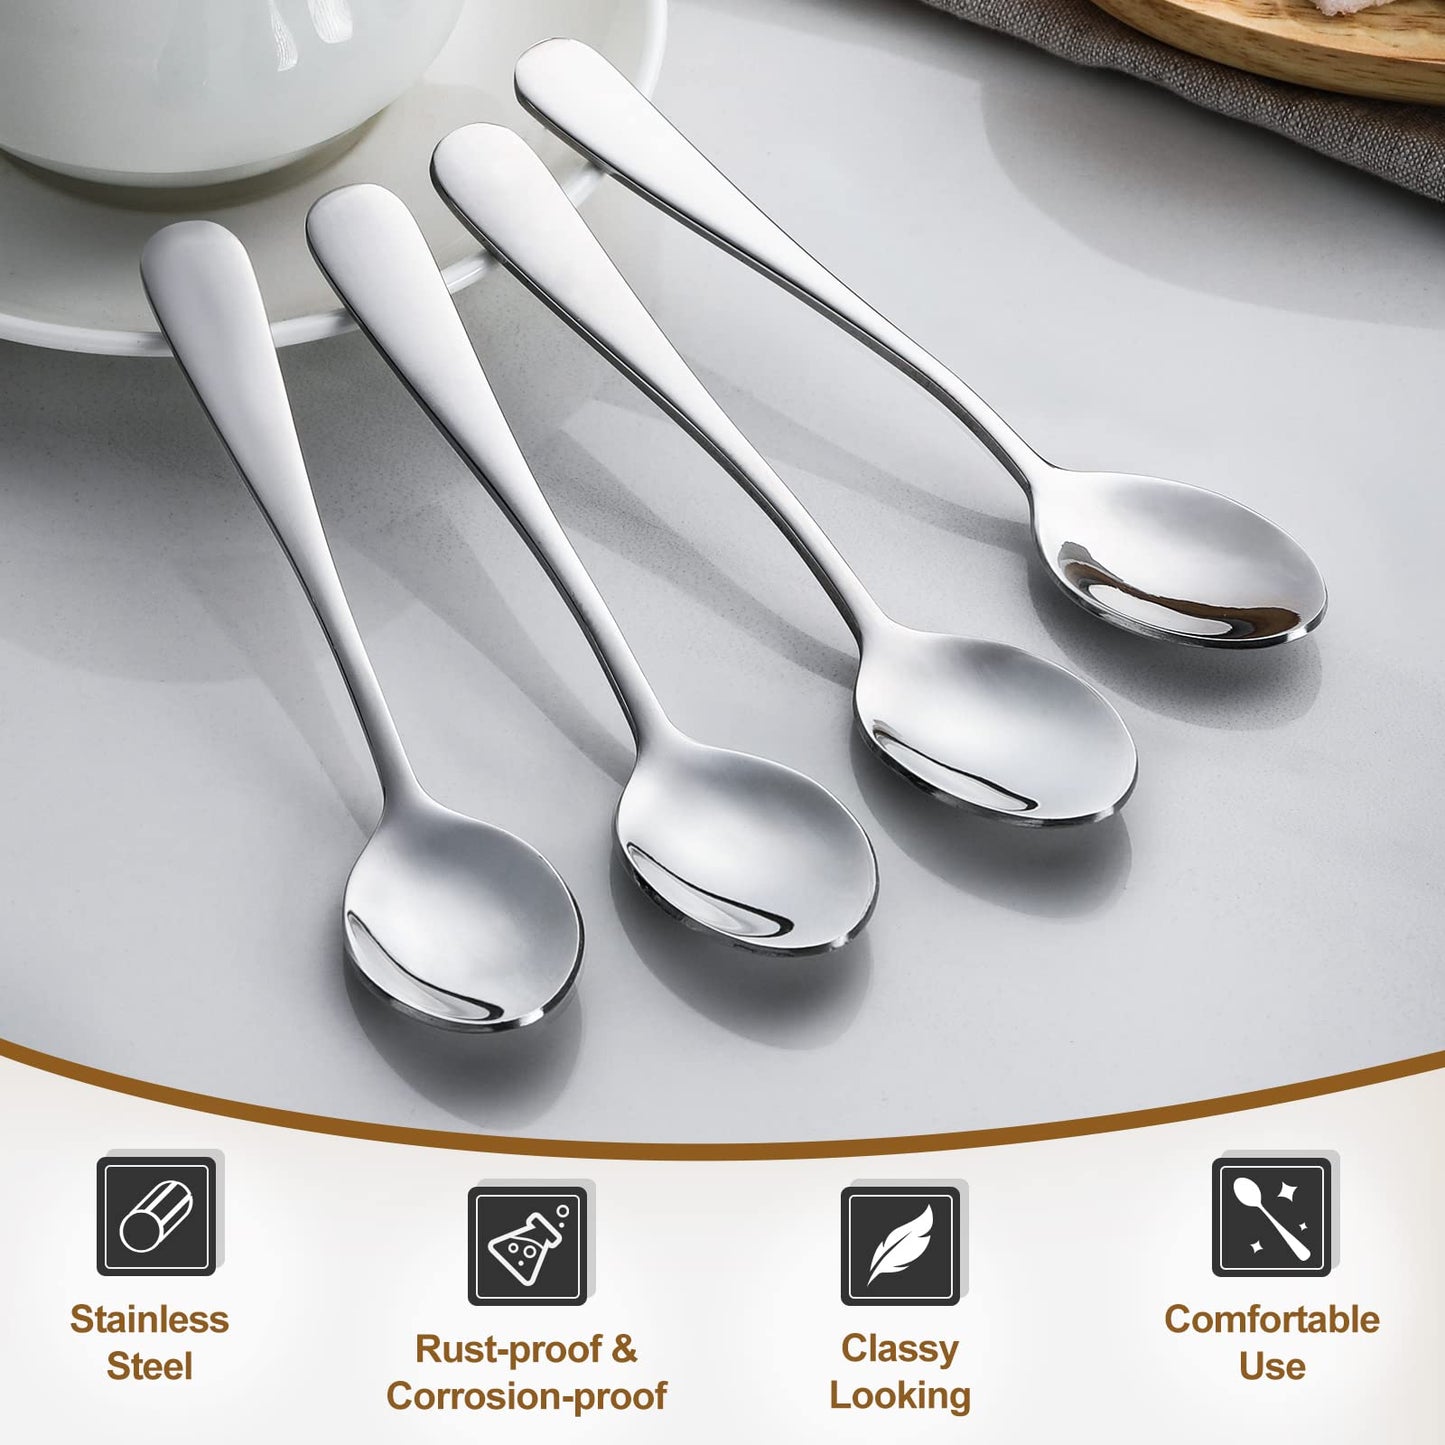 Hiware 6-Piece Demitasse Espresso Spoons